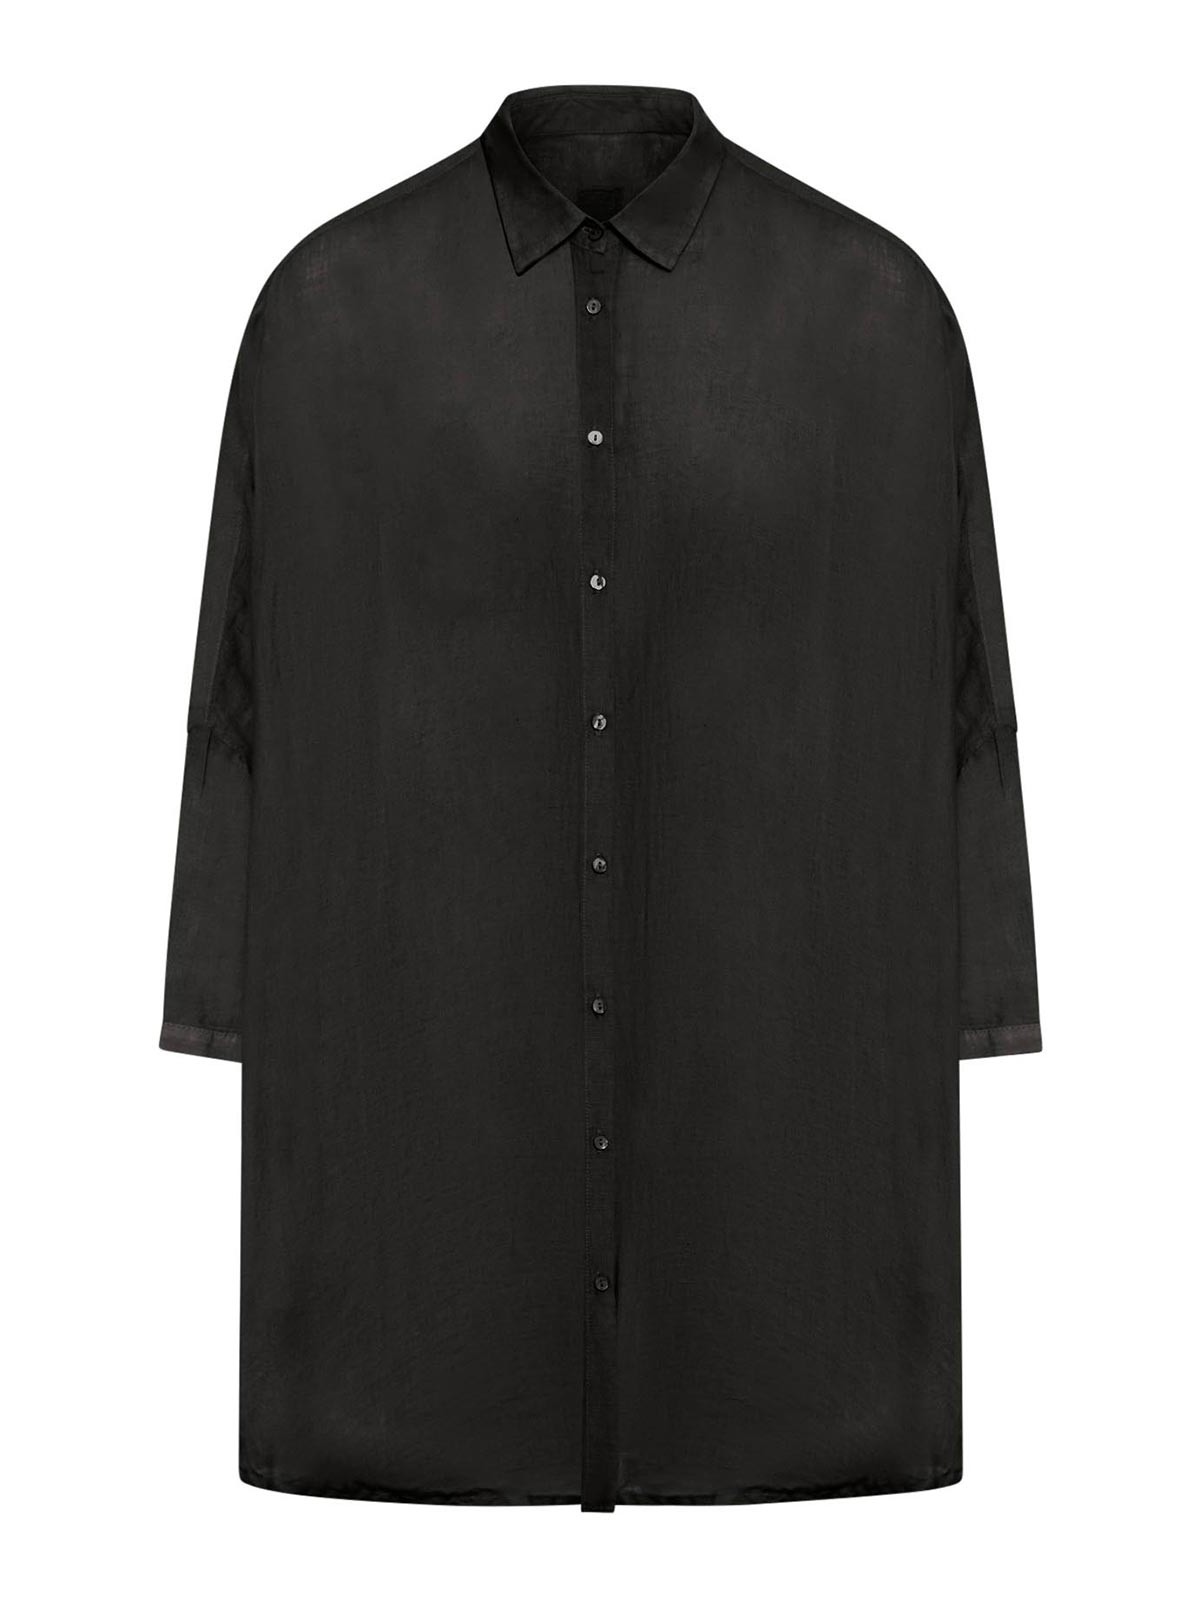 Shop 120% Lino Shirt In Black